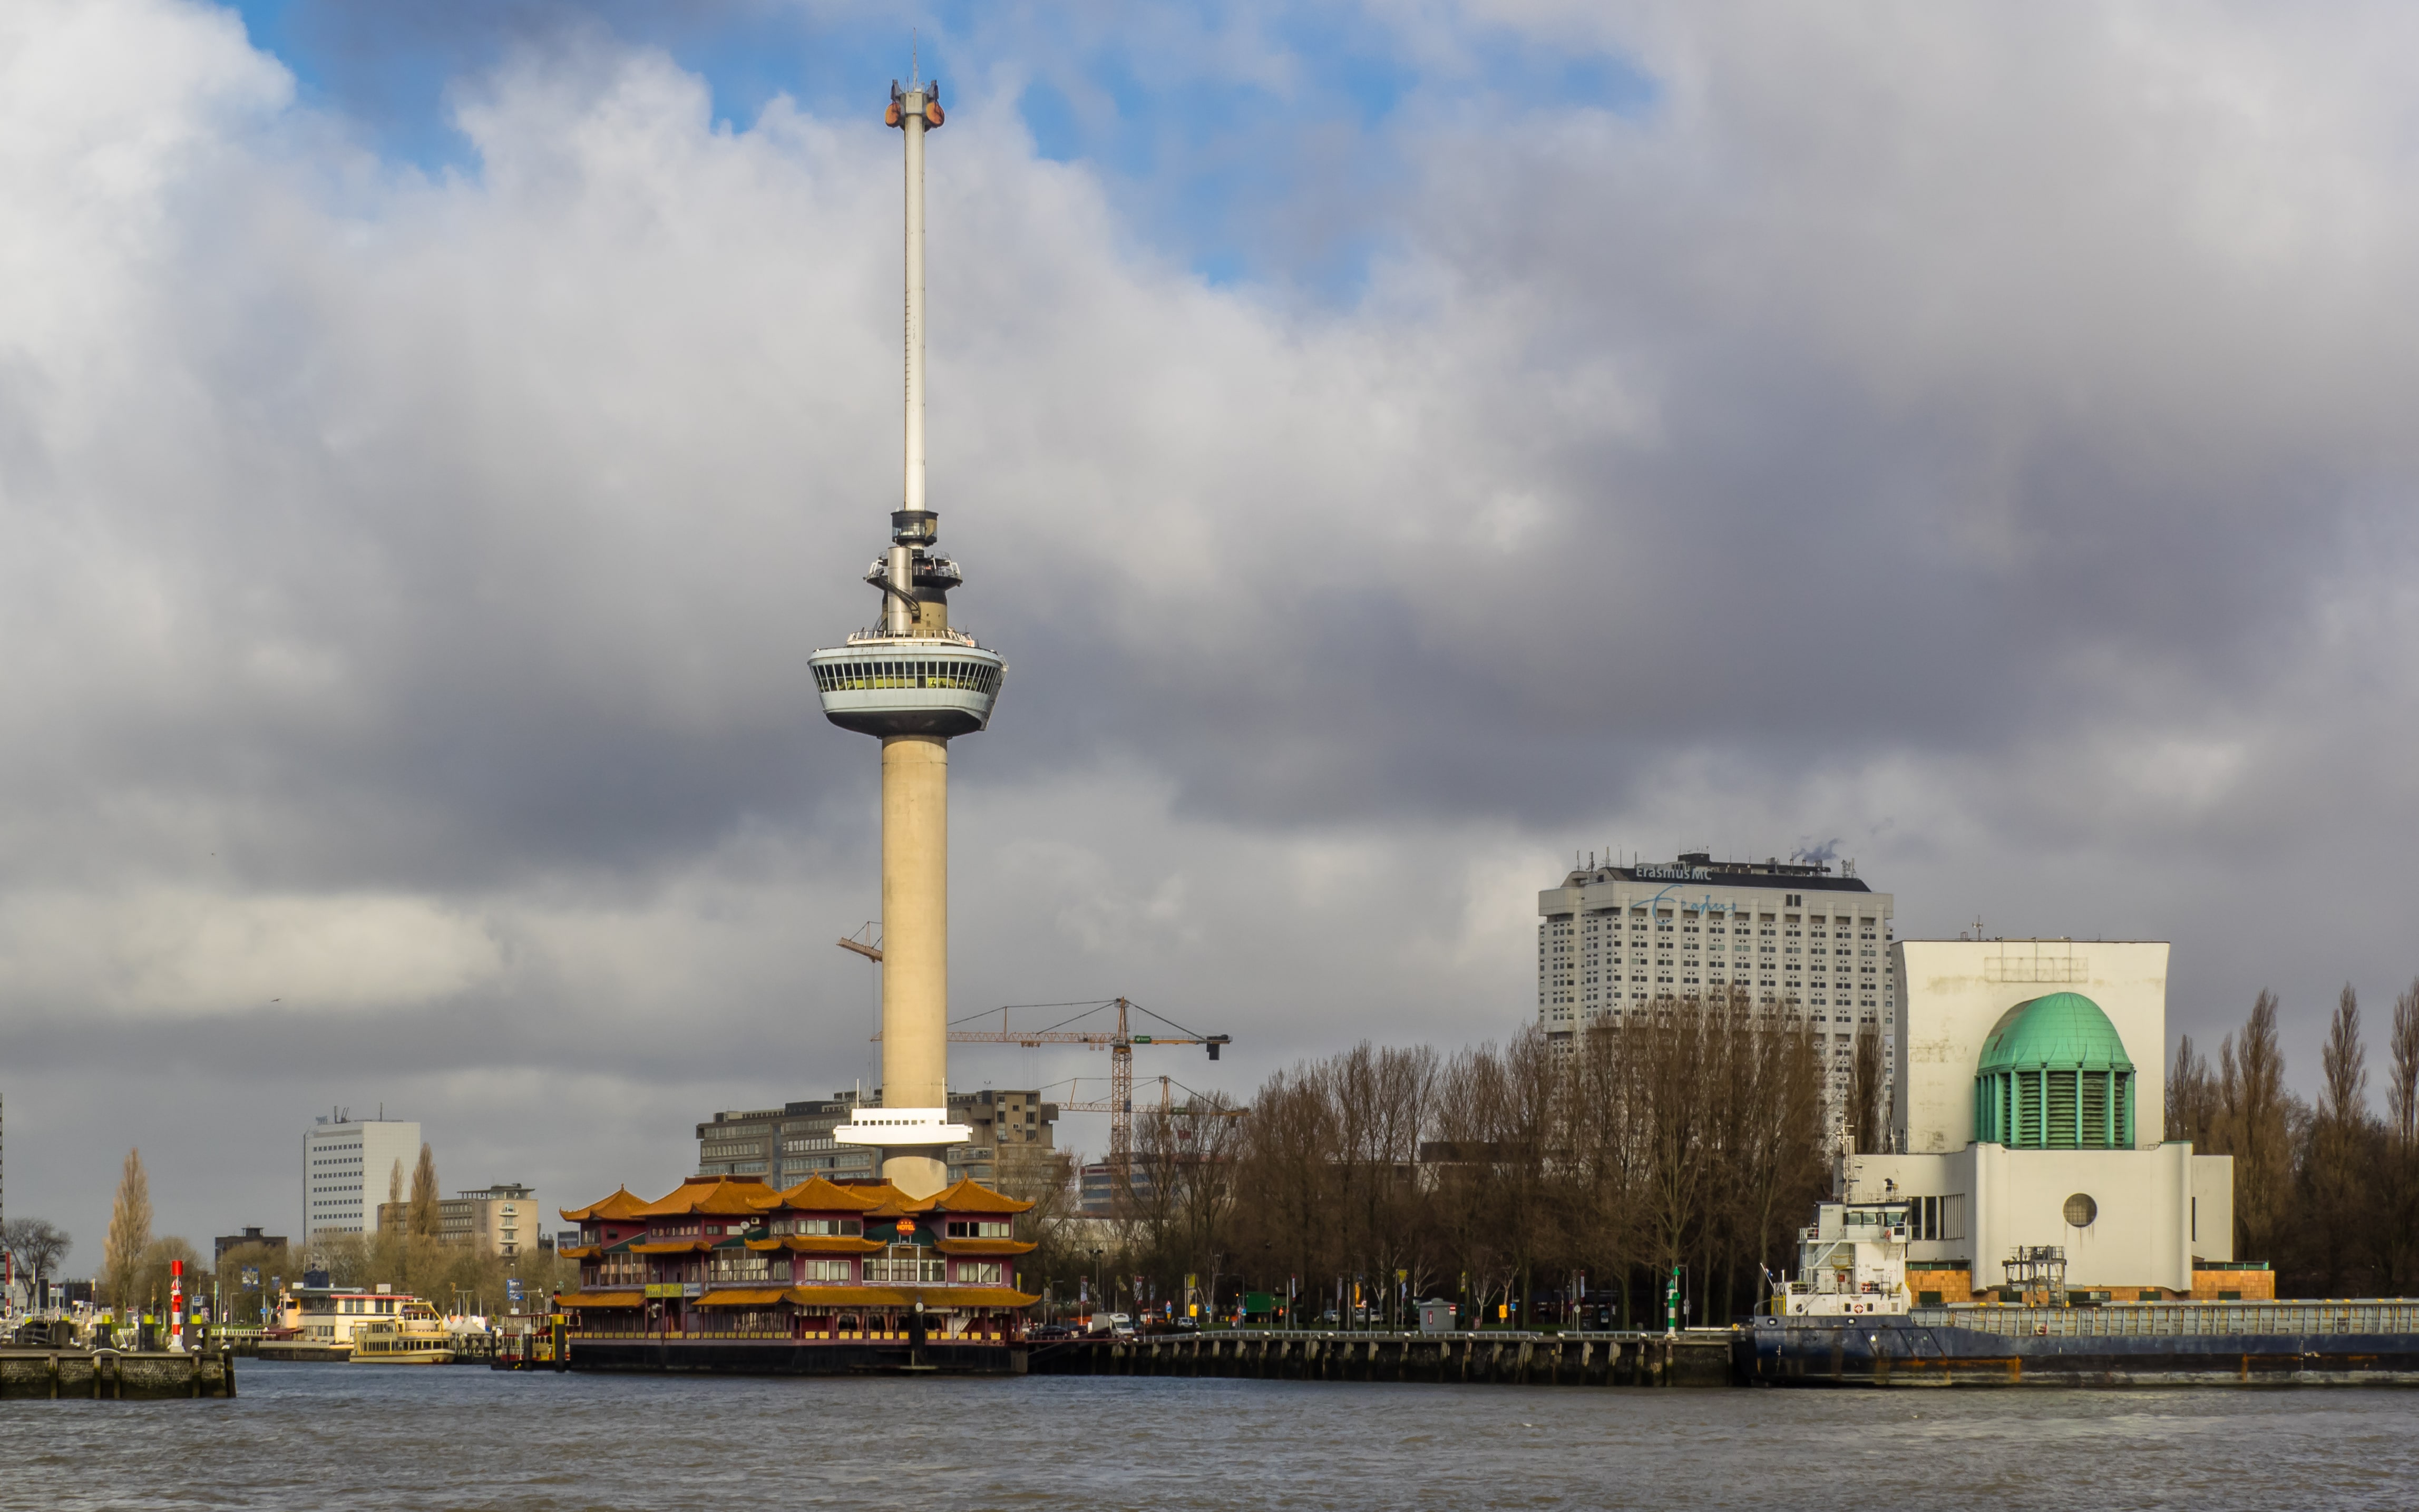 City of Rotterdam - Euromast